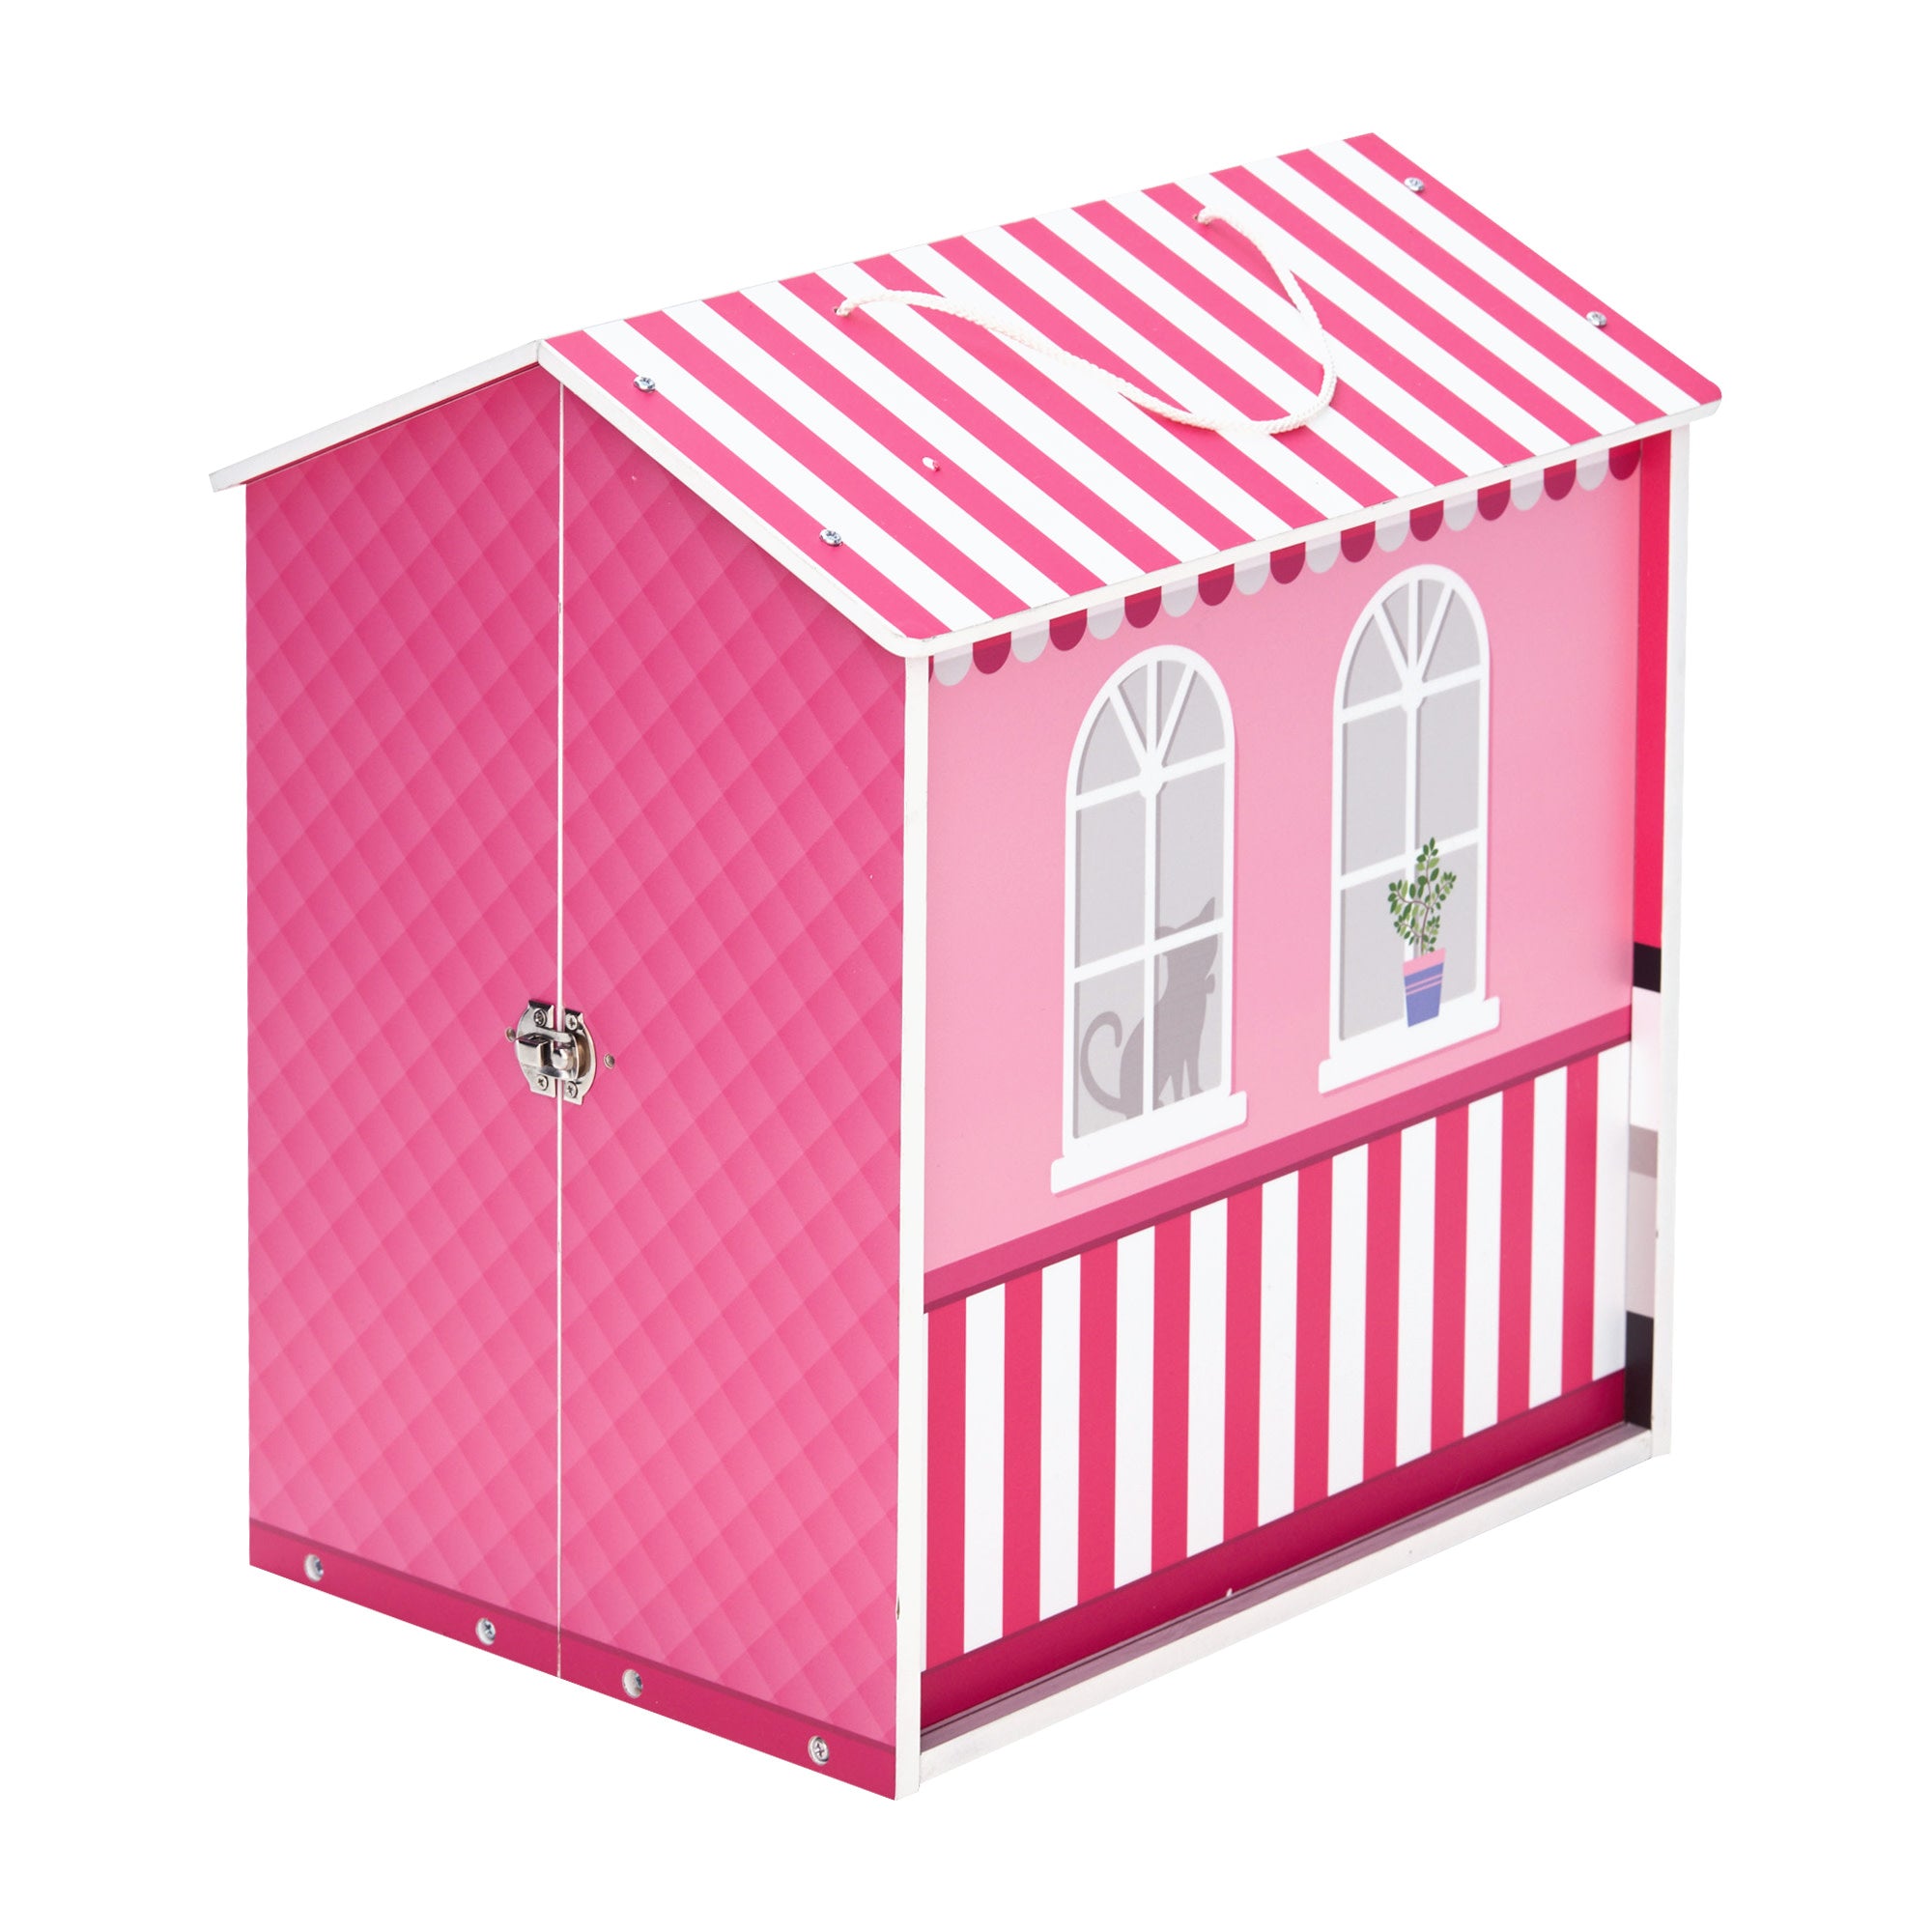 Olivia's Little World Dreamland City Café Dollhouse, Pink